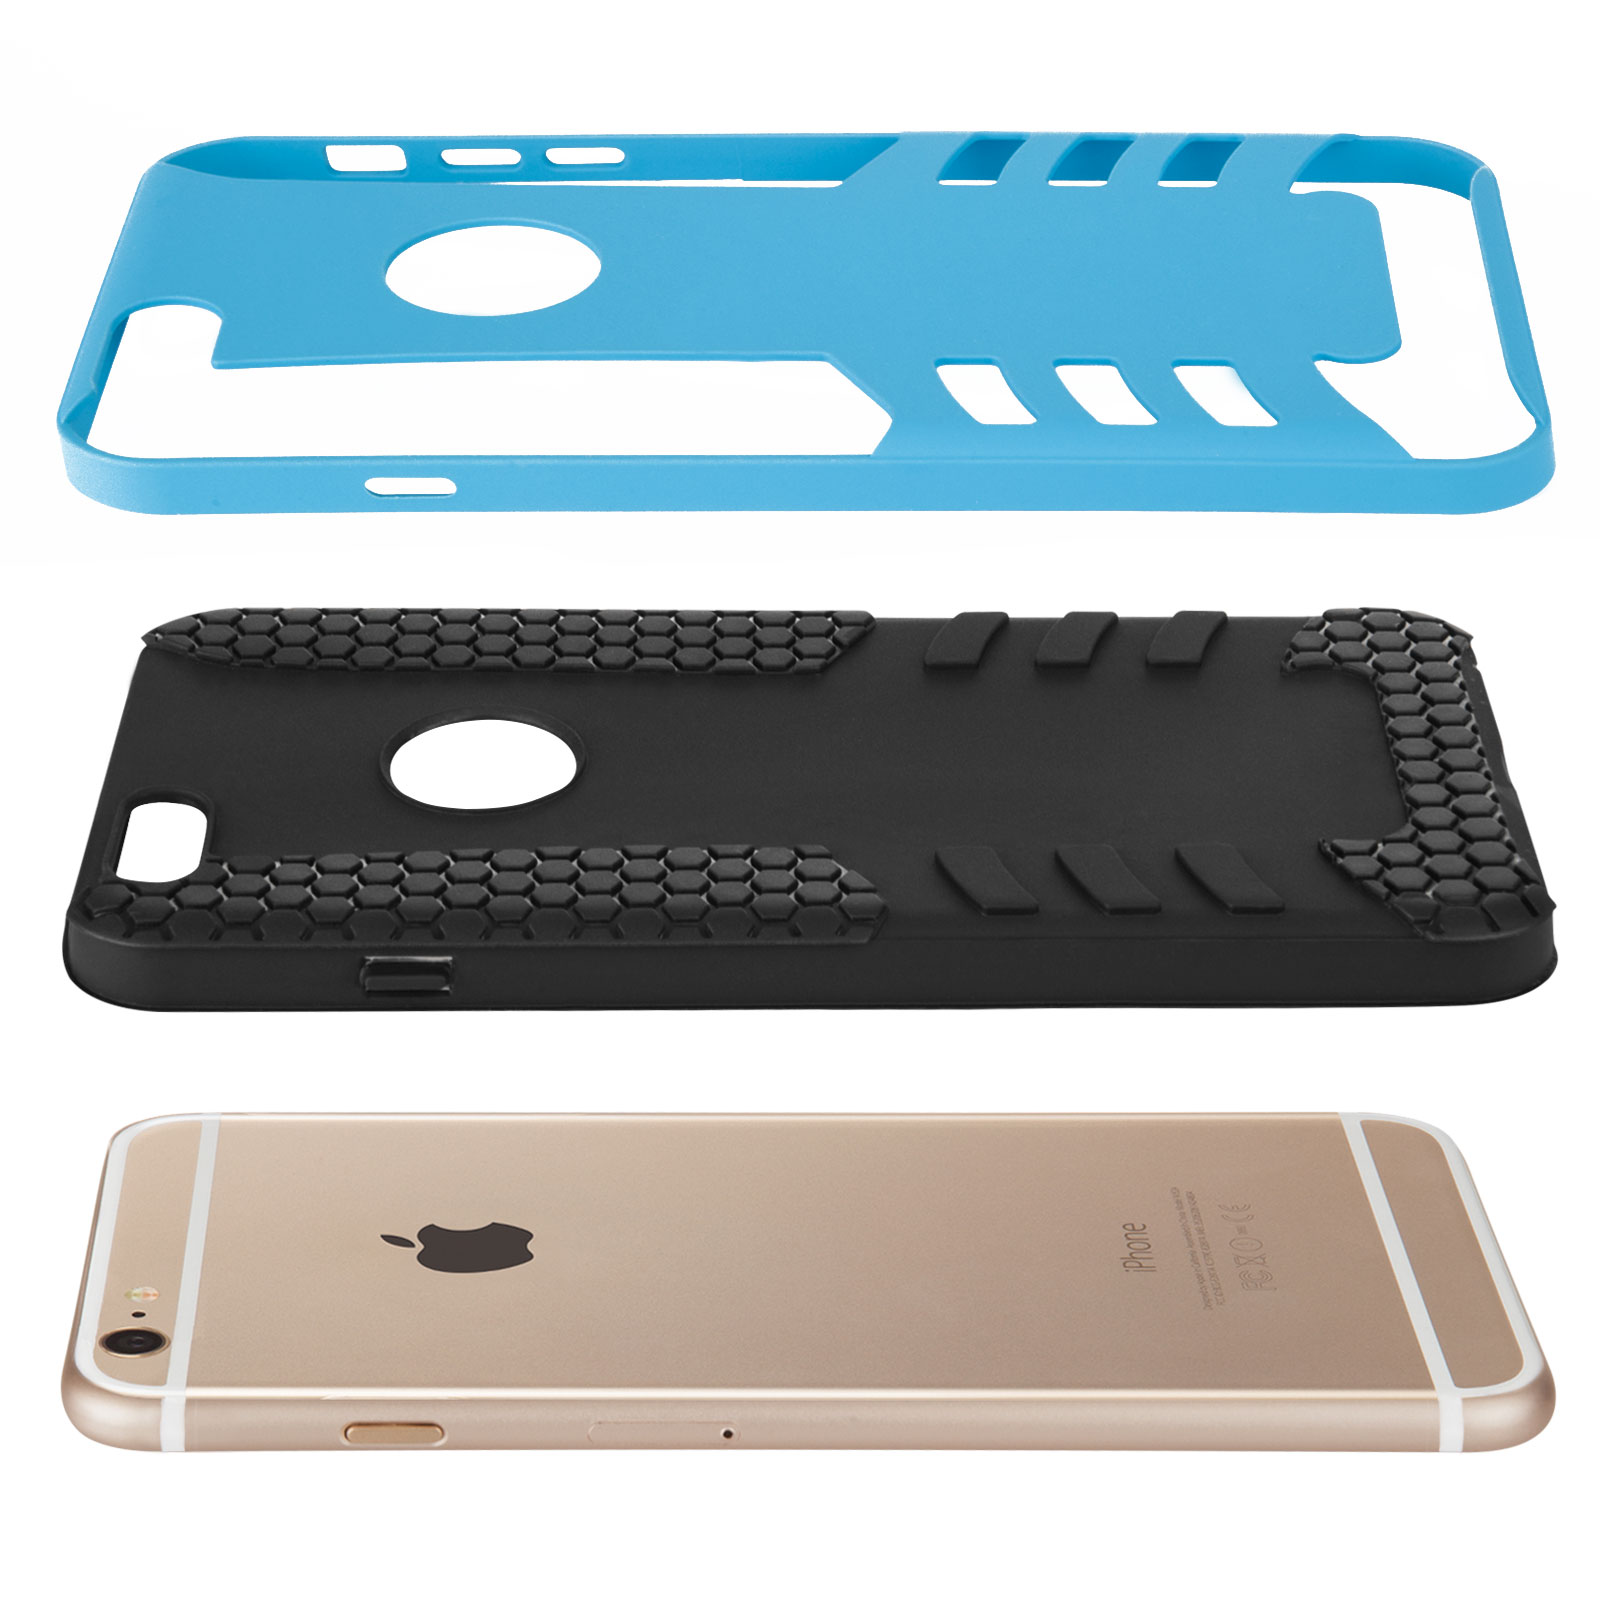 YouSave iPhone 6 Plus Border Combo Case - Blue